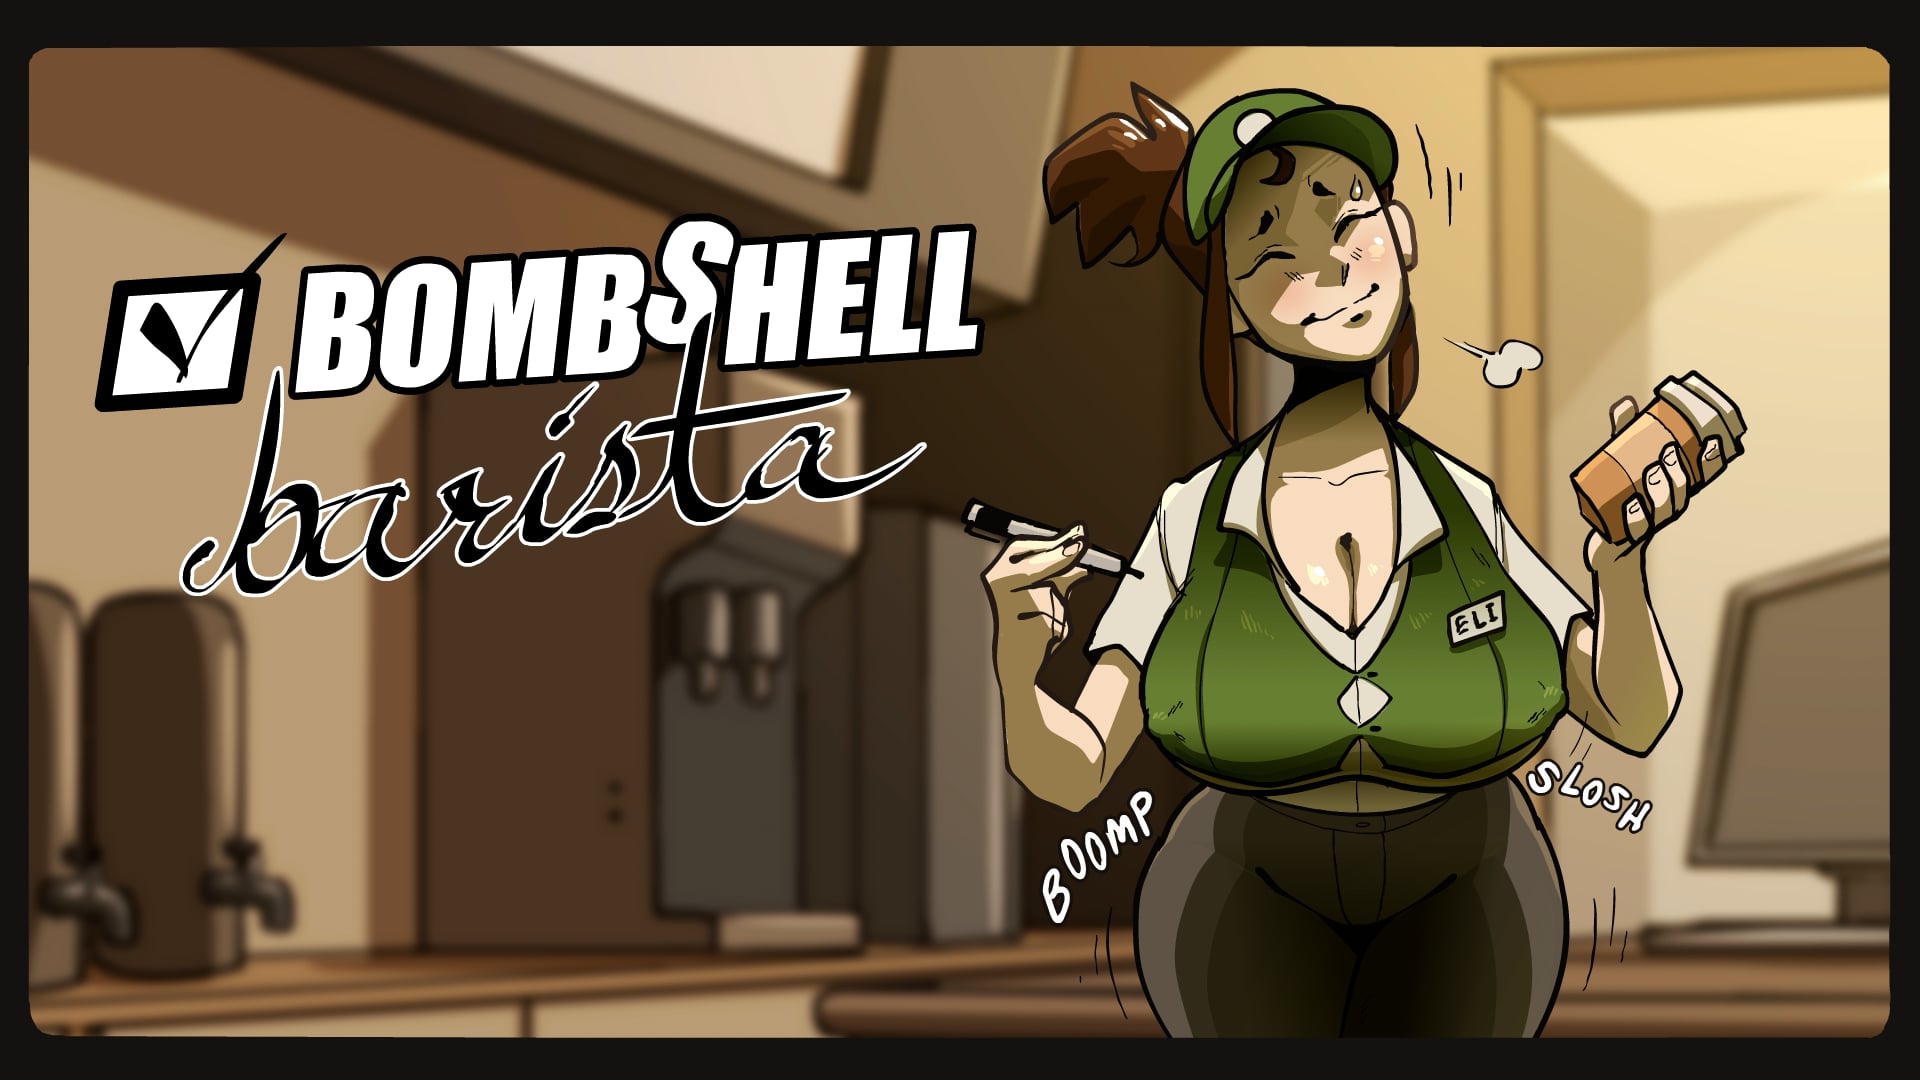 Bombshell bariata